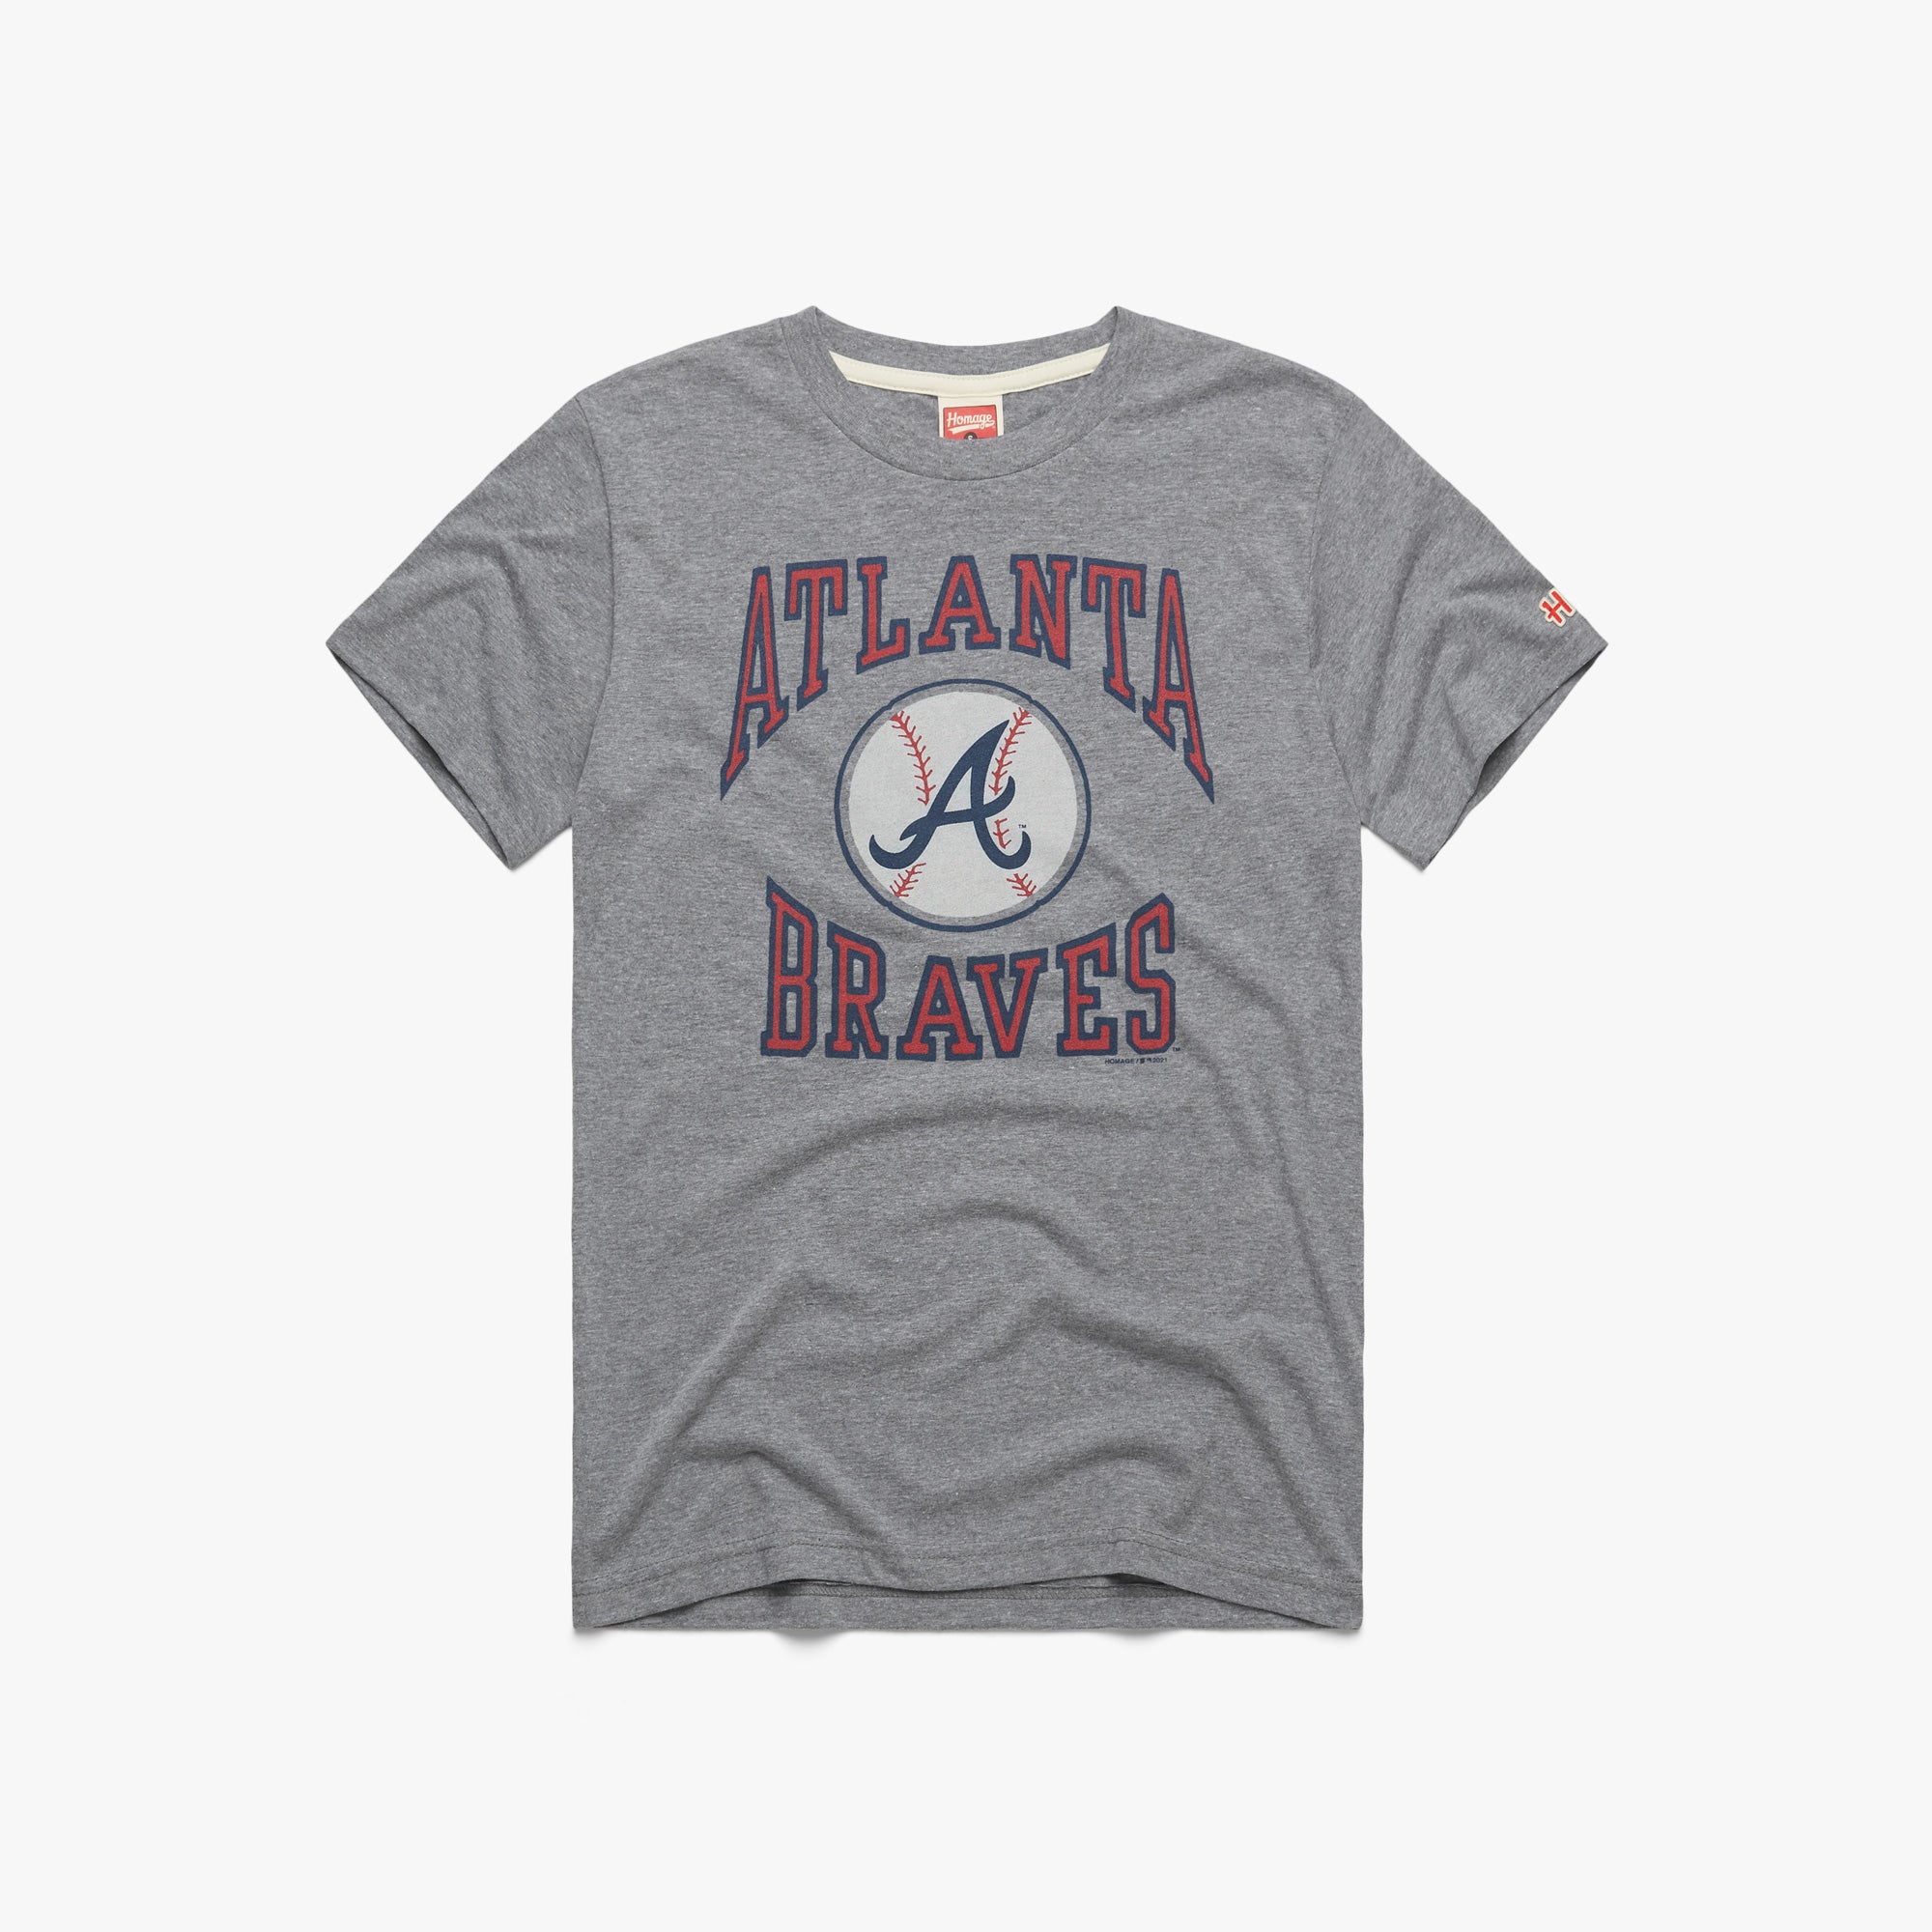 Braves shirt idea  Braves shirts, Baseball shirts, Shirts